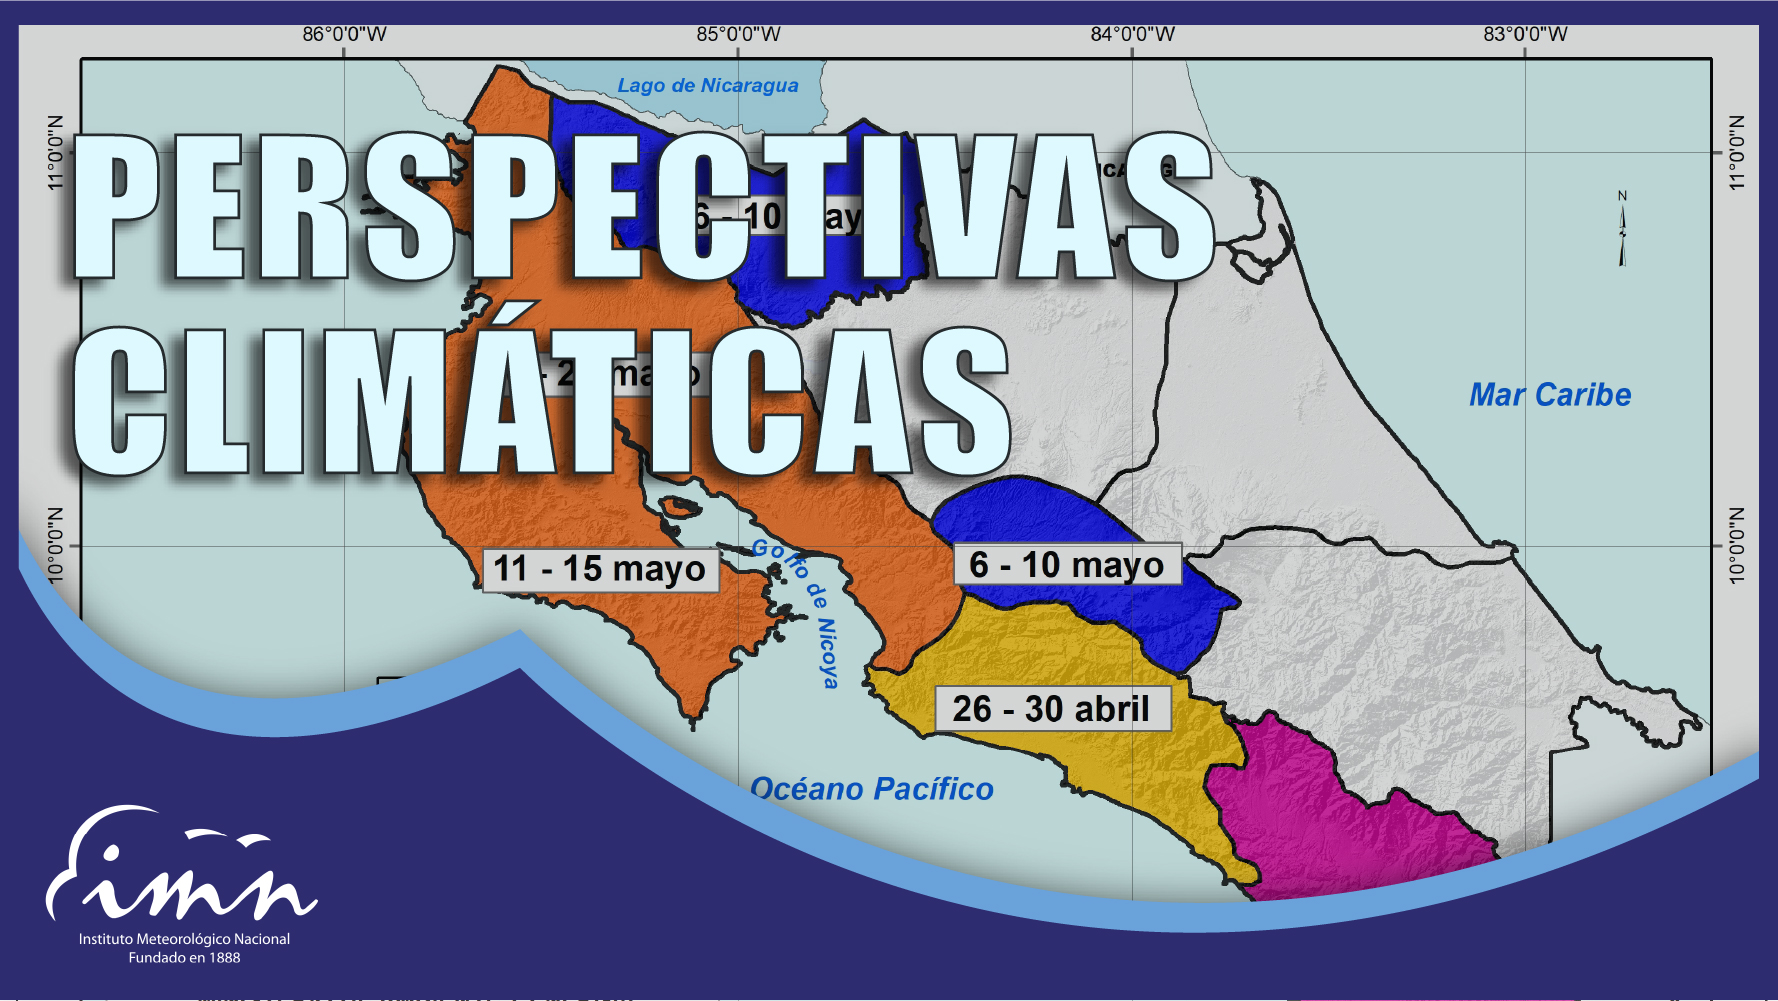 Decorative image of Cosa Rica map